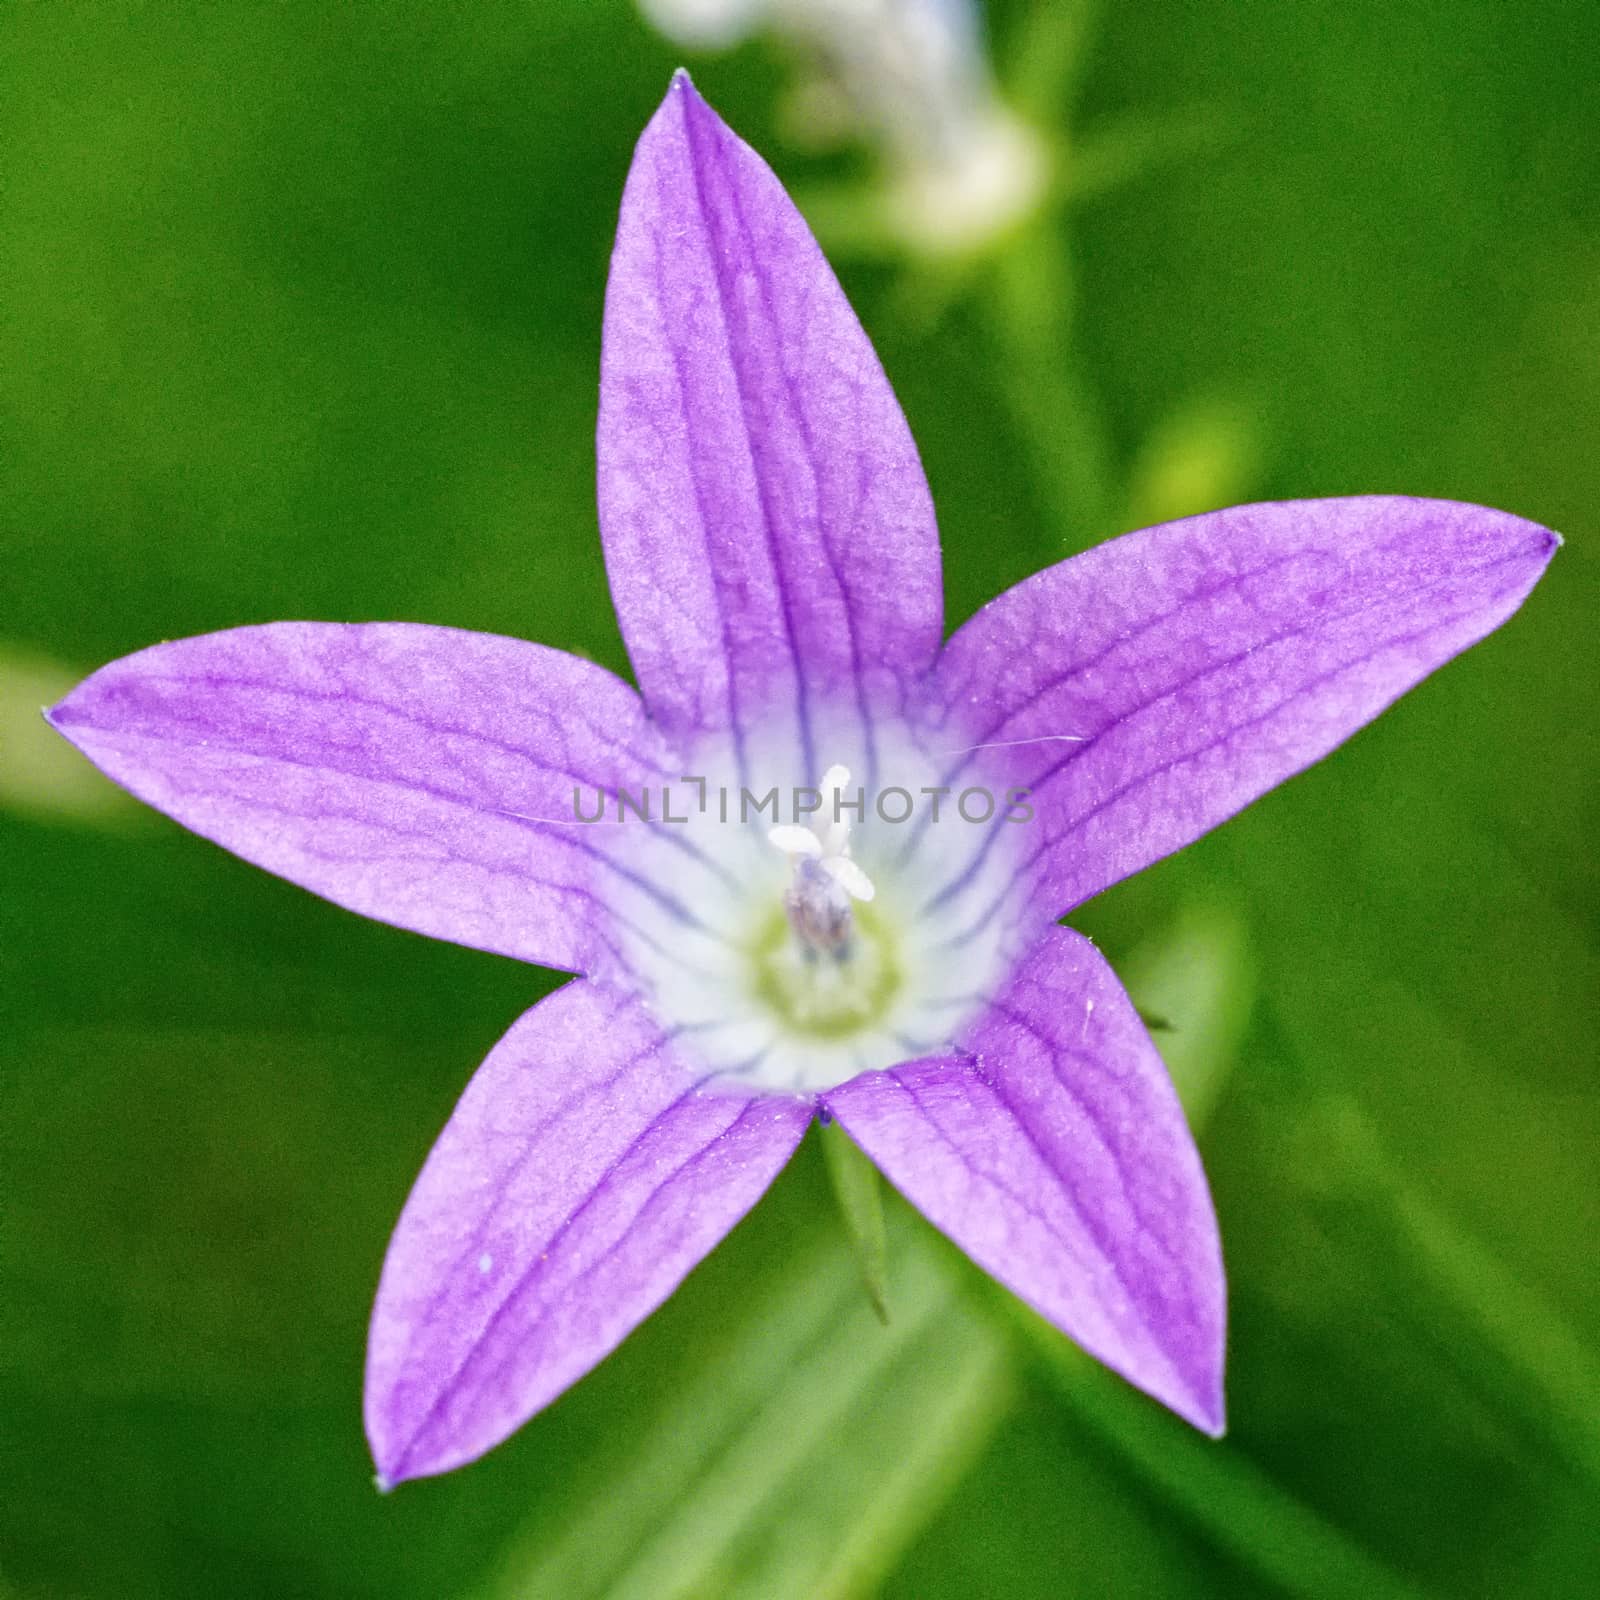 Vilolet flower by neryx